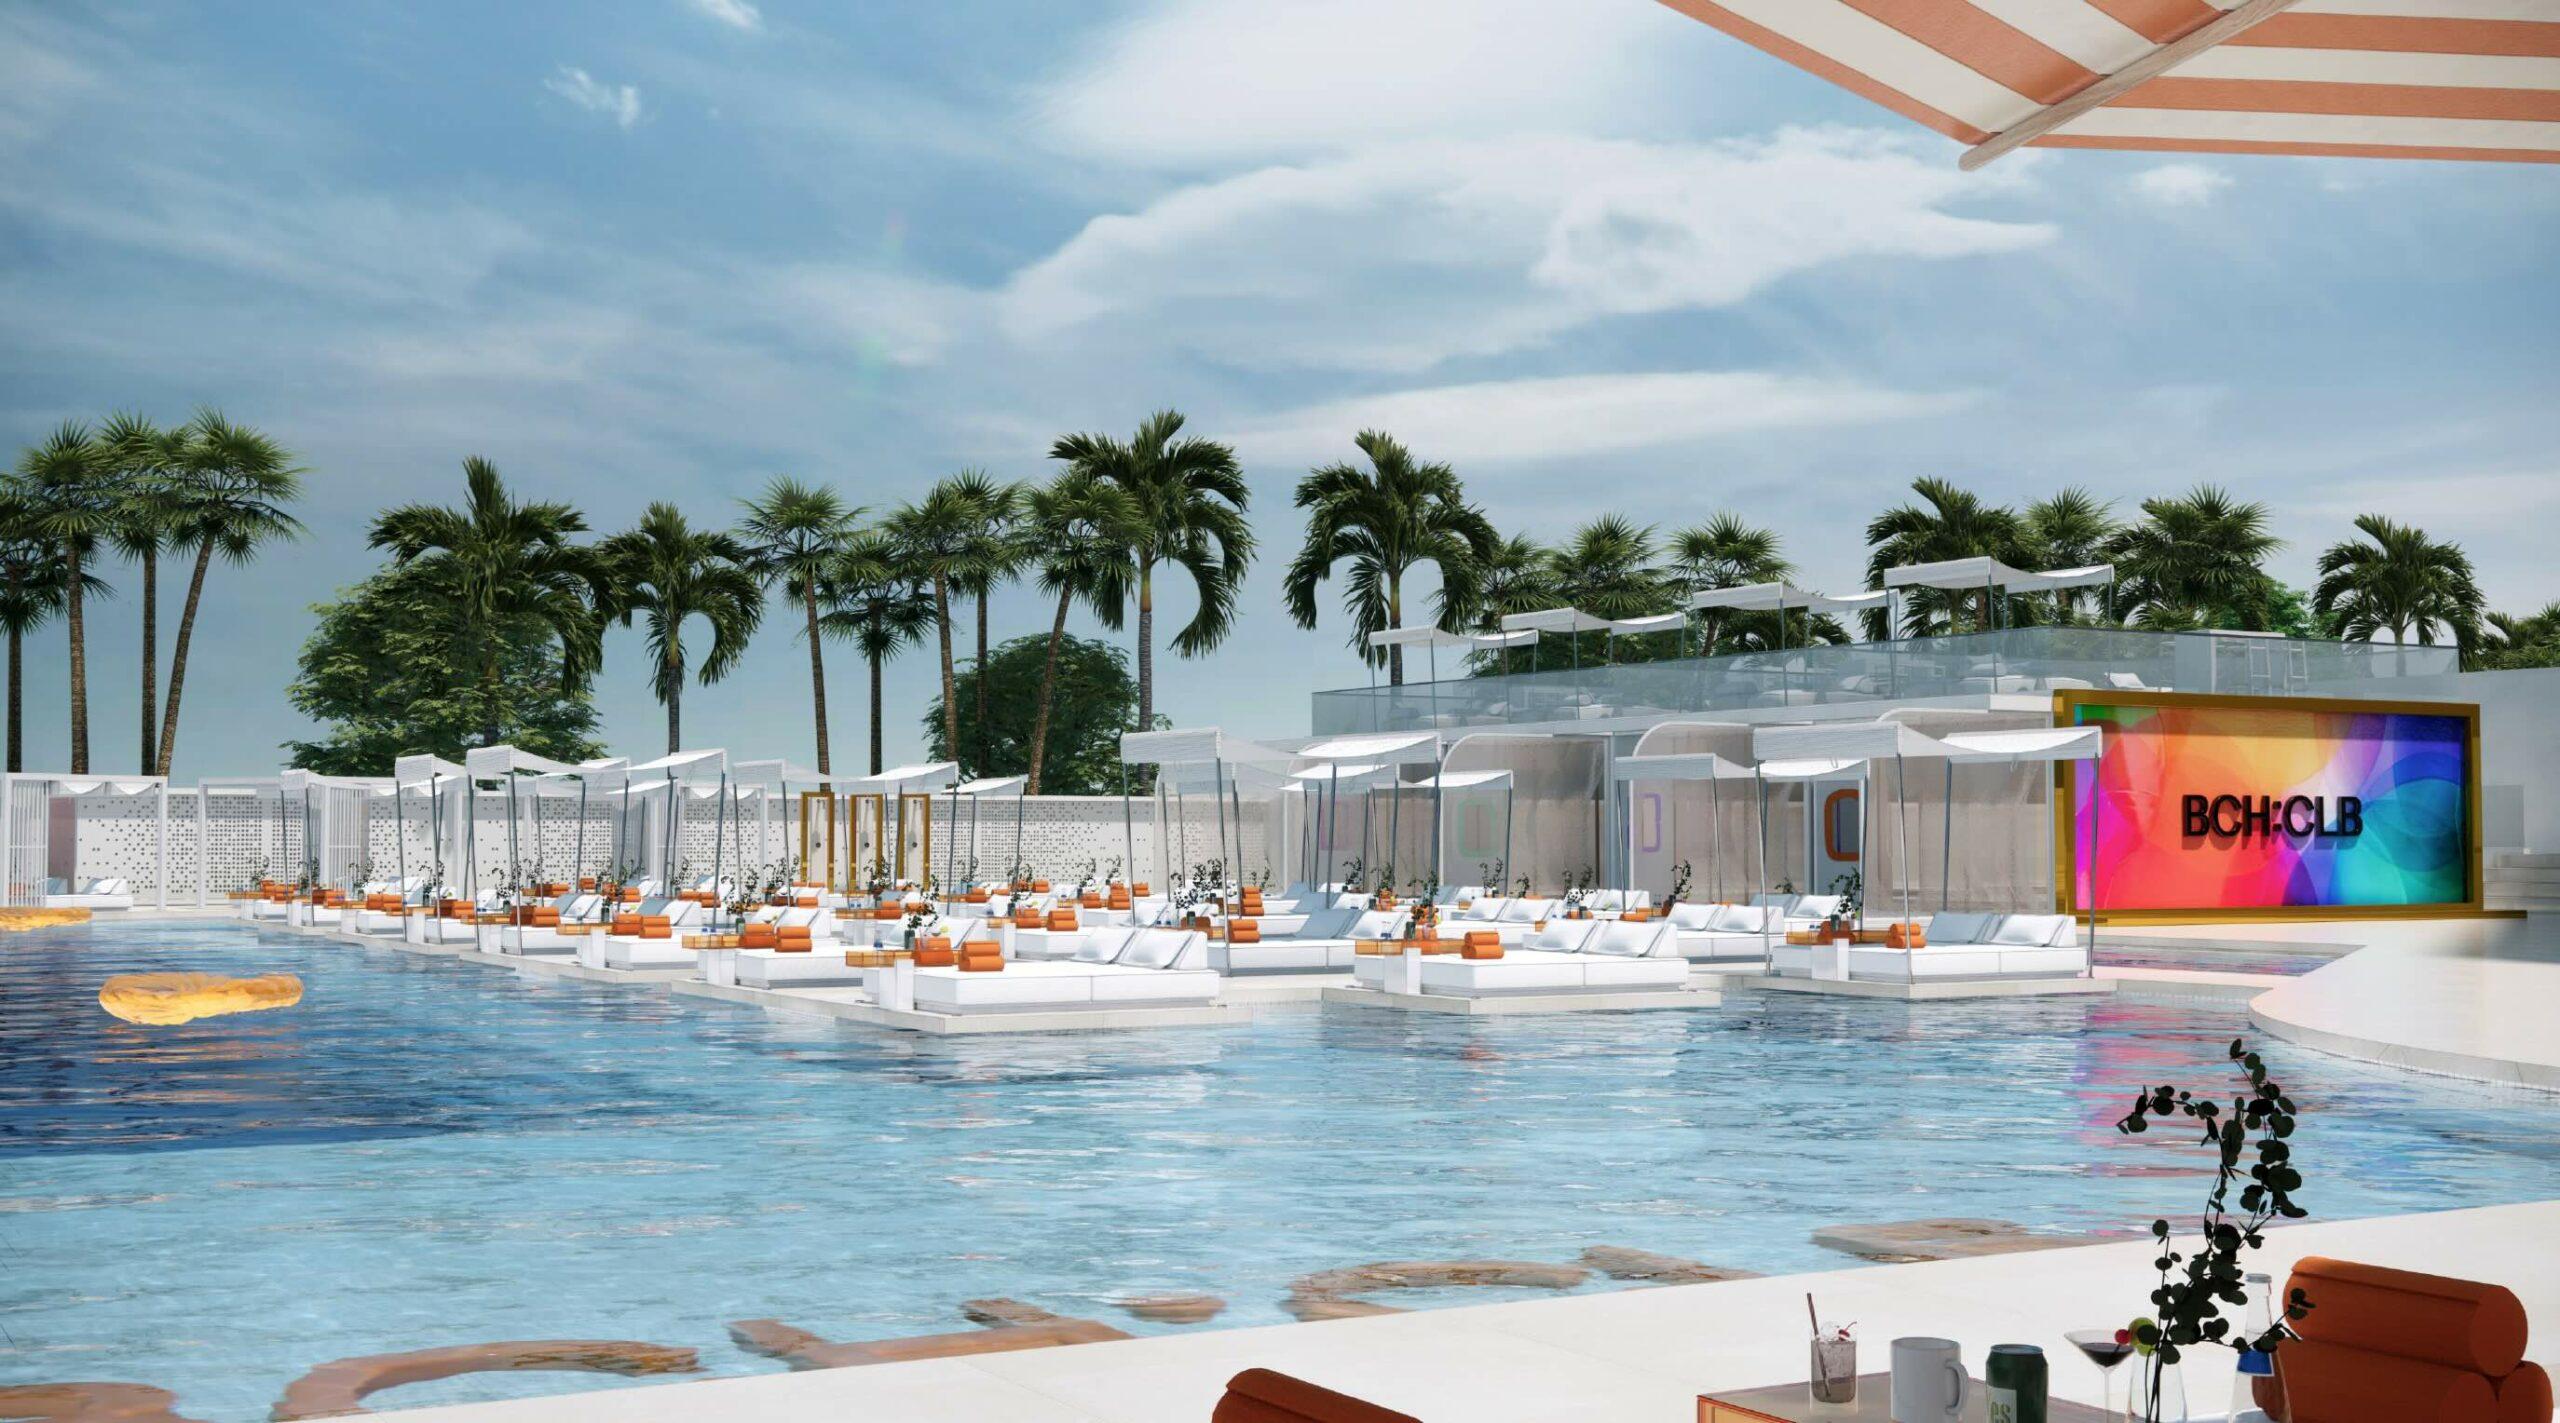 A new beach club is coming to W Dubai - The Palm